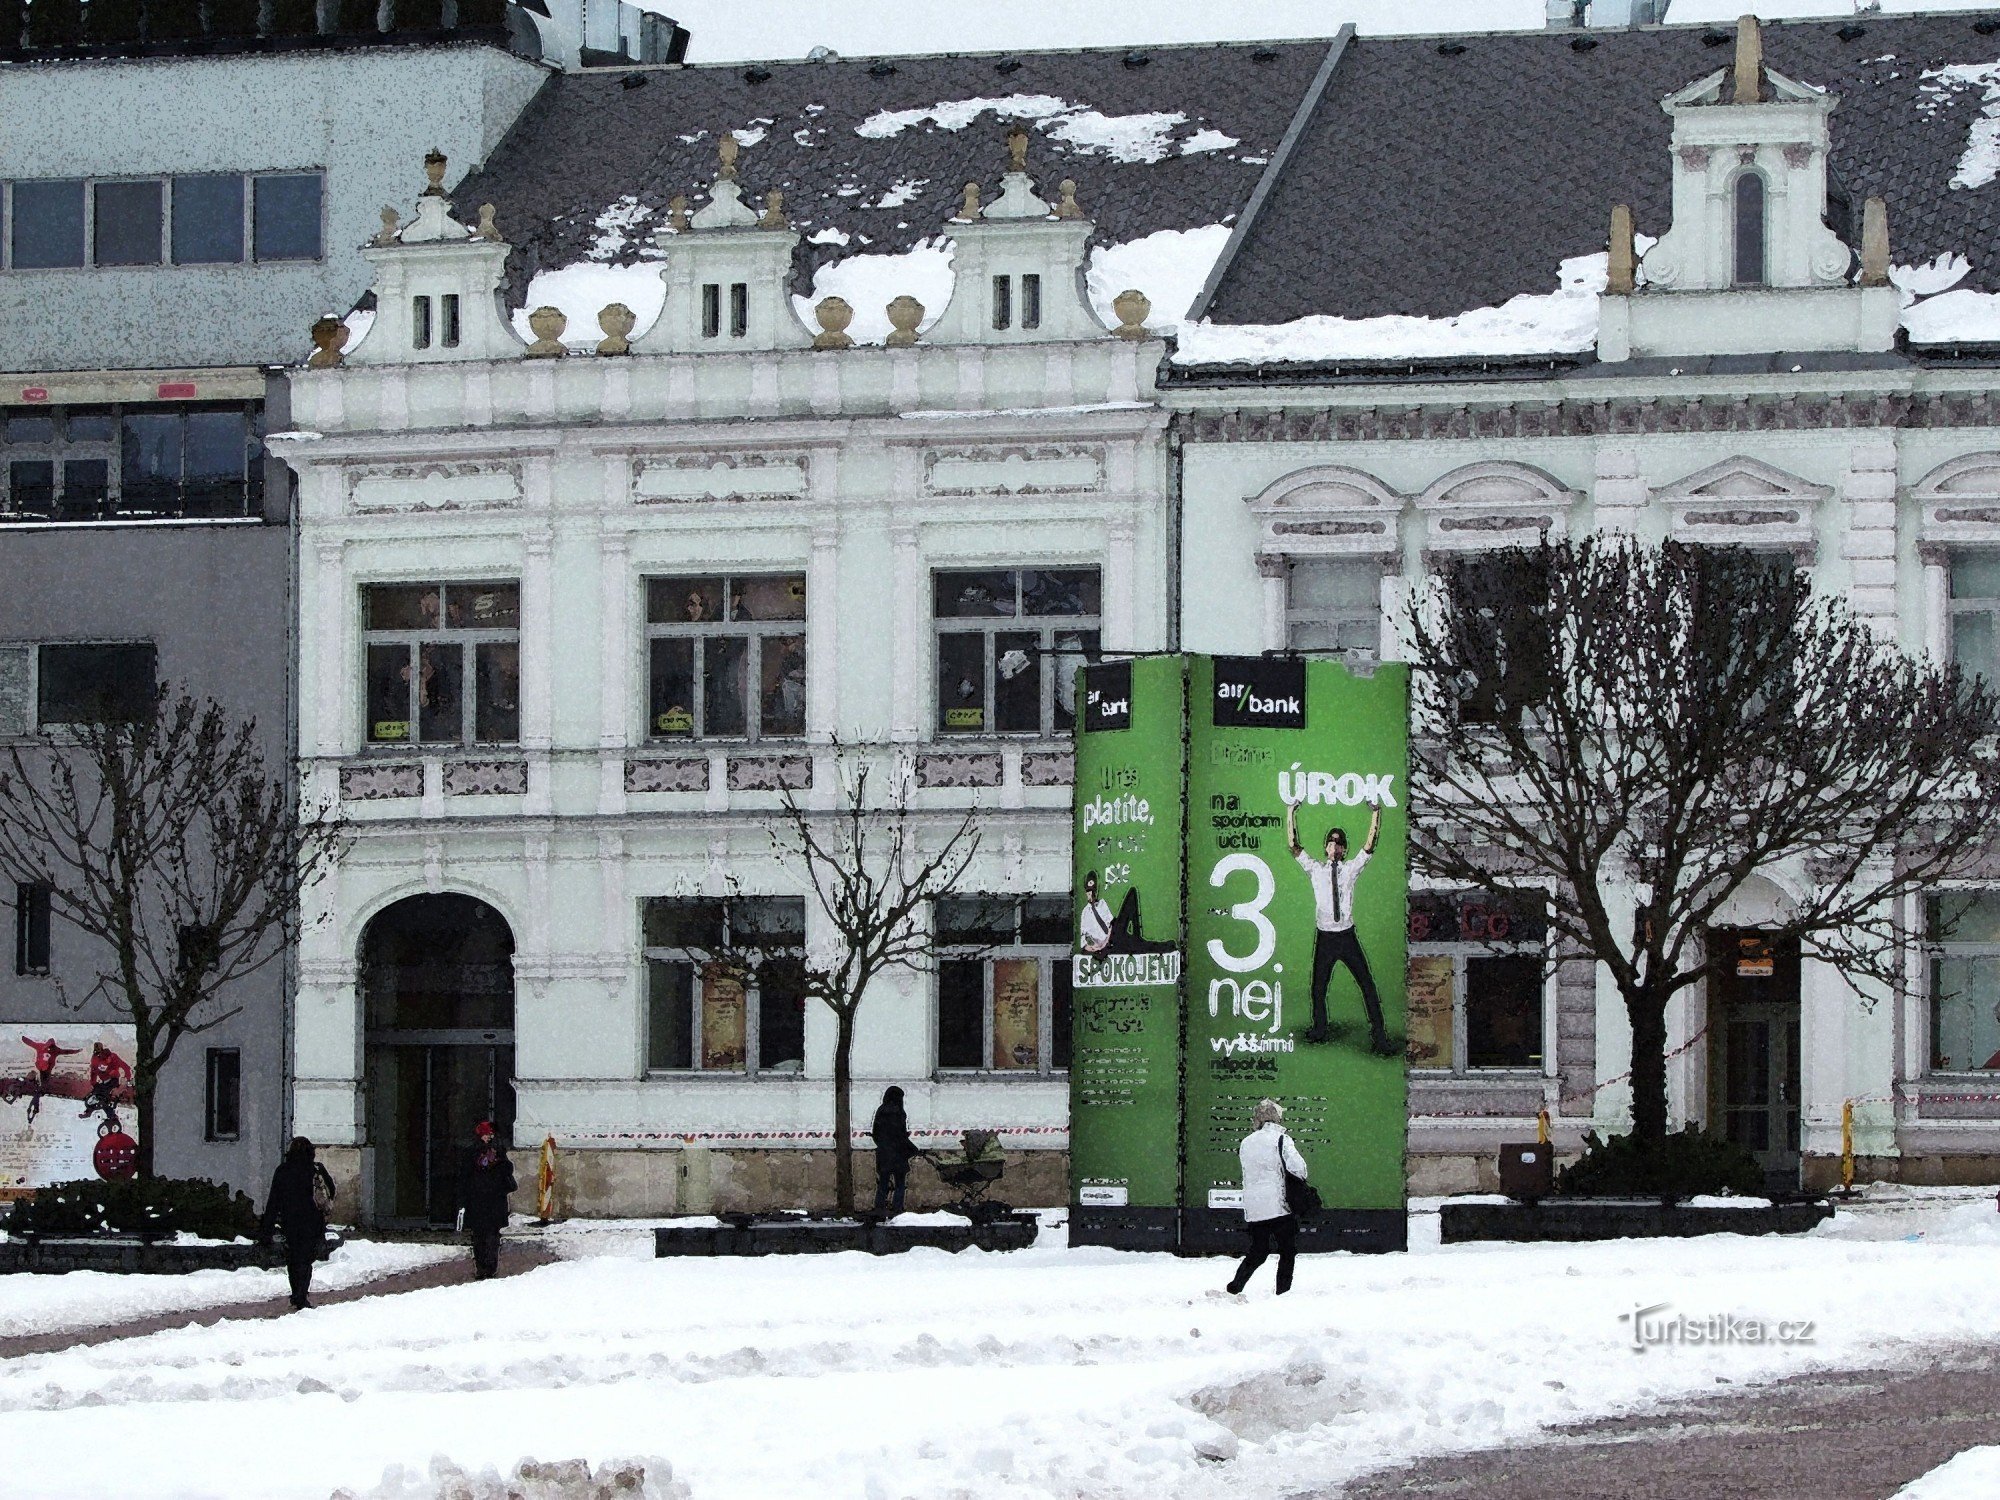 Zlín's main square - Peace Square